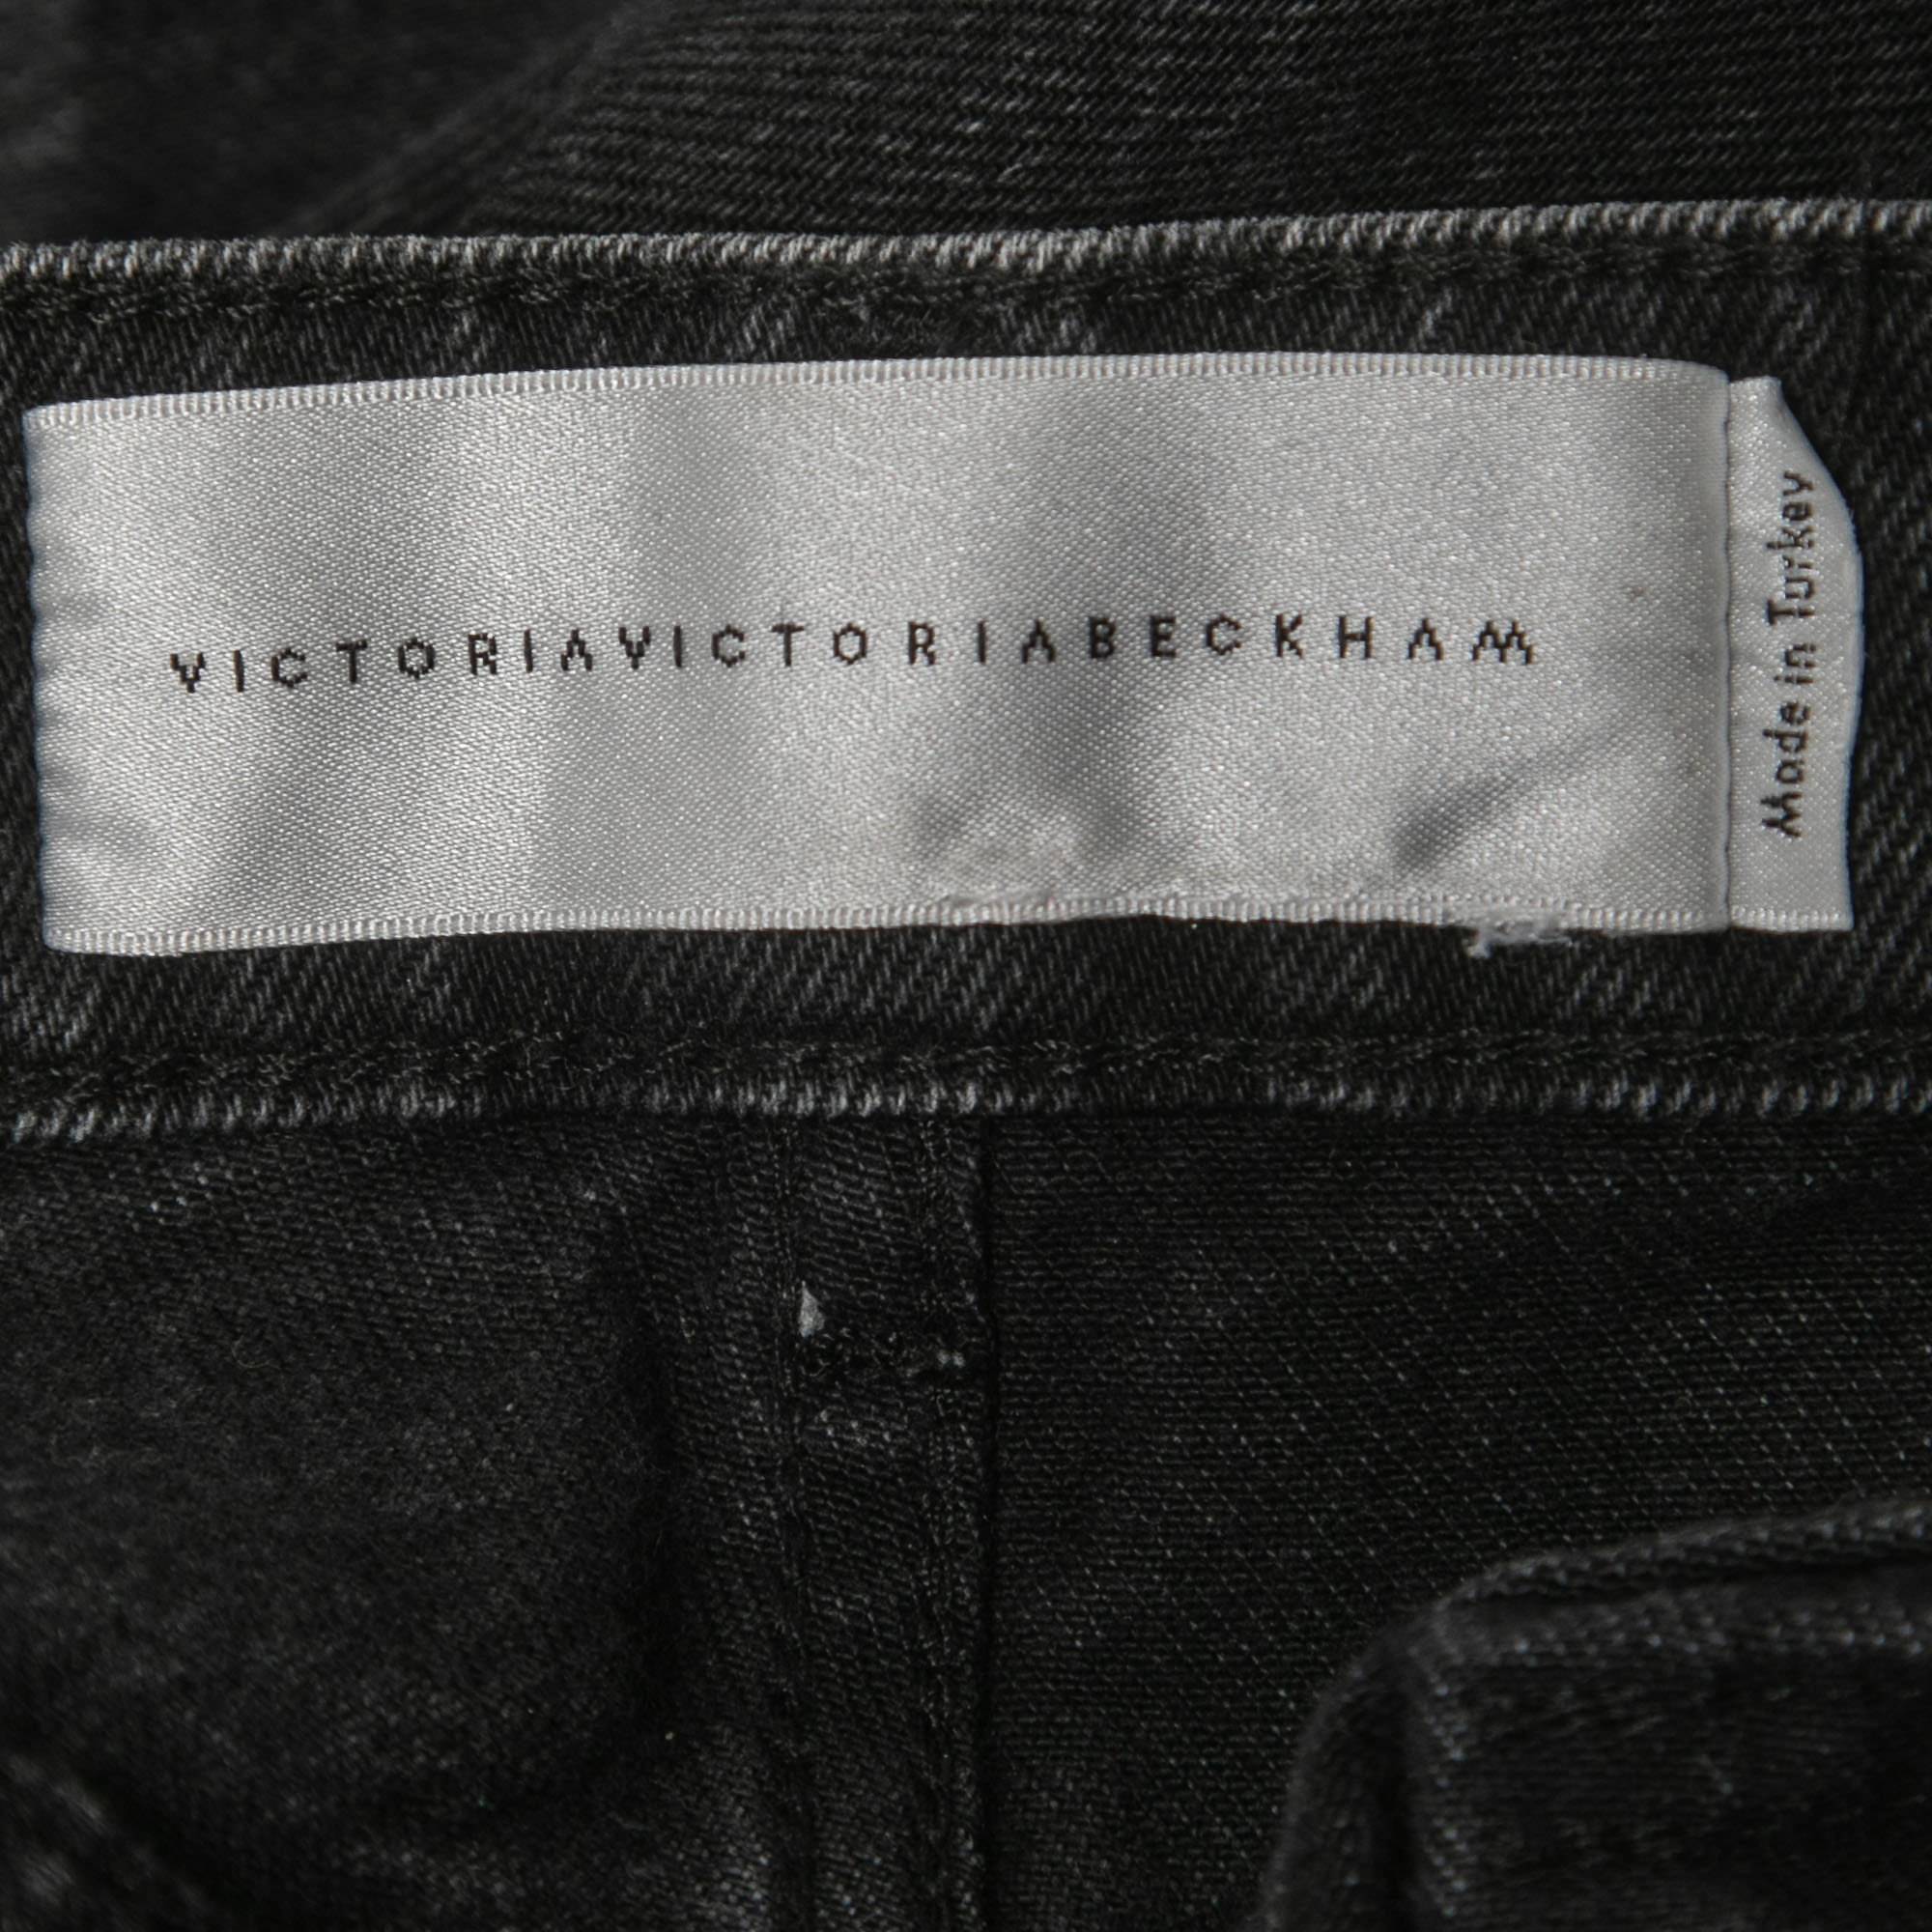 Victoria Victoria Beckham Black Denim Frayed Hem Jeans S